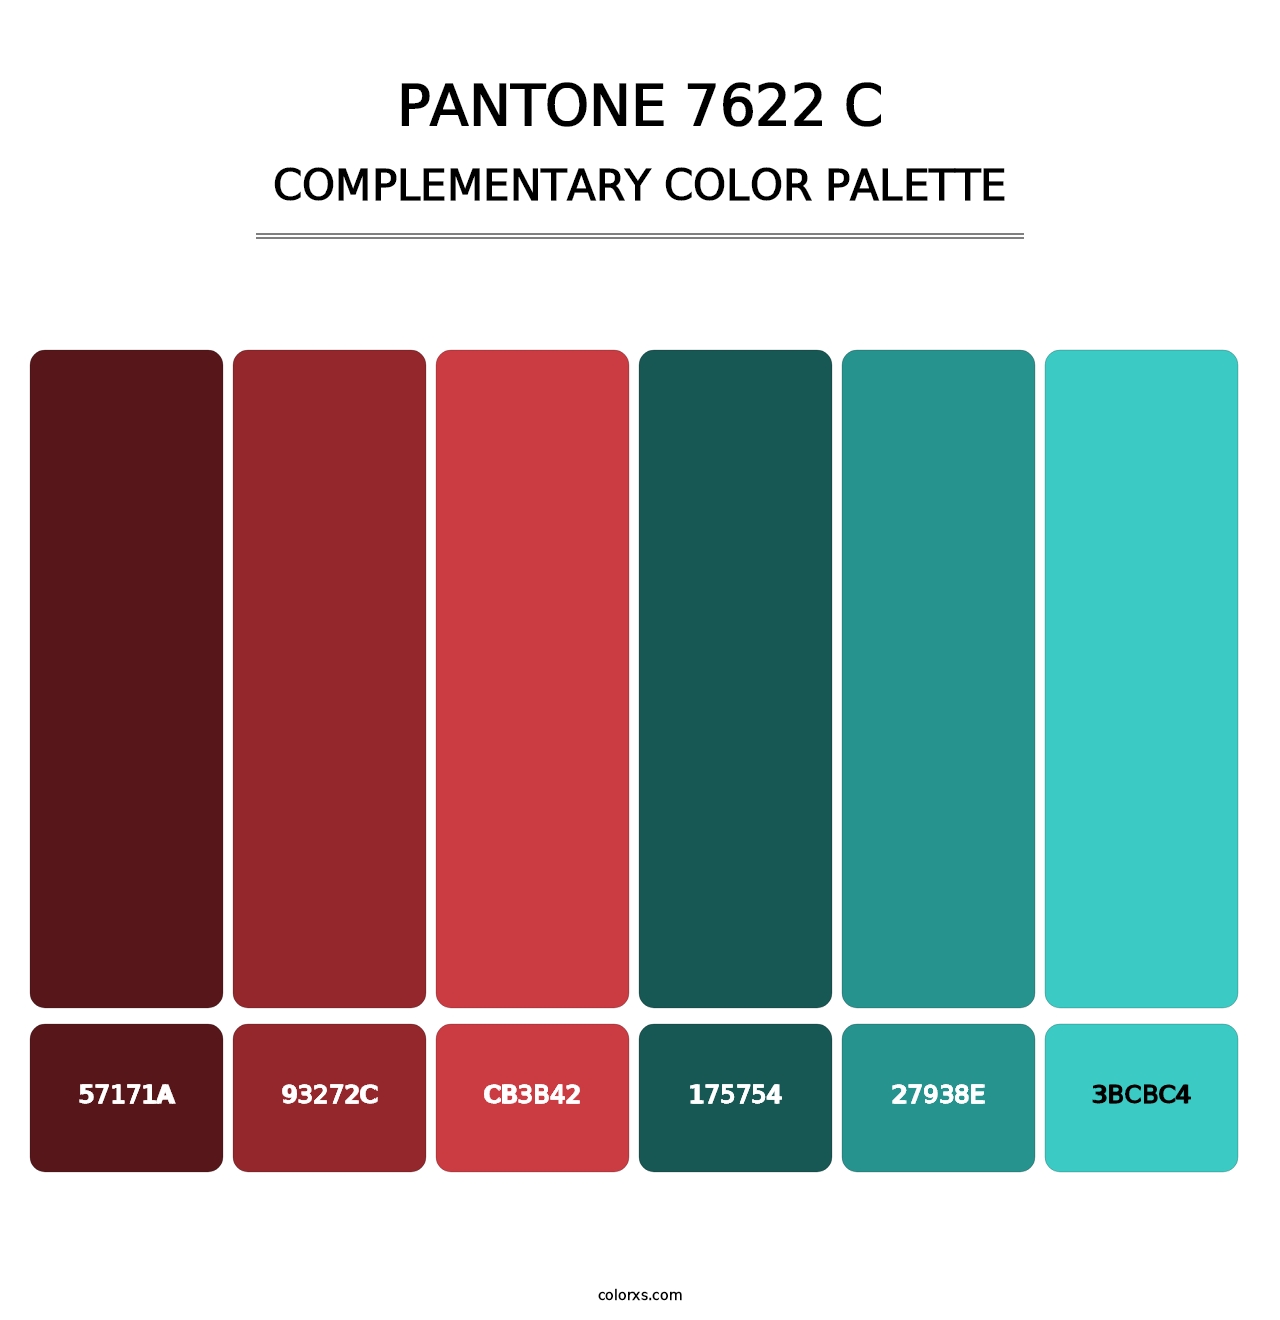 PANTONE 7622 C - Complementary Color Palette